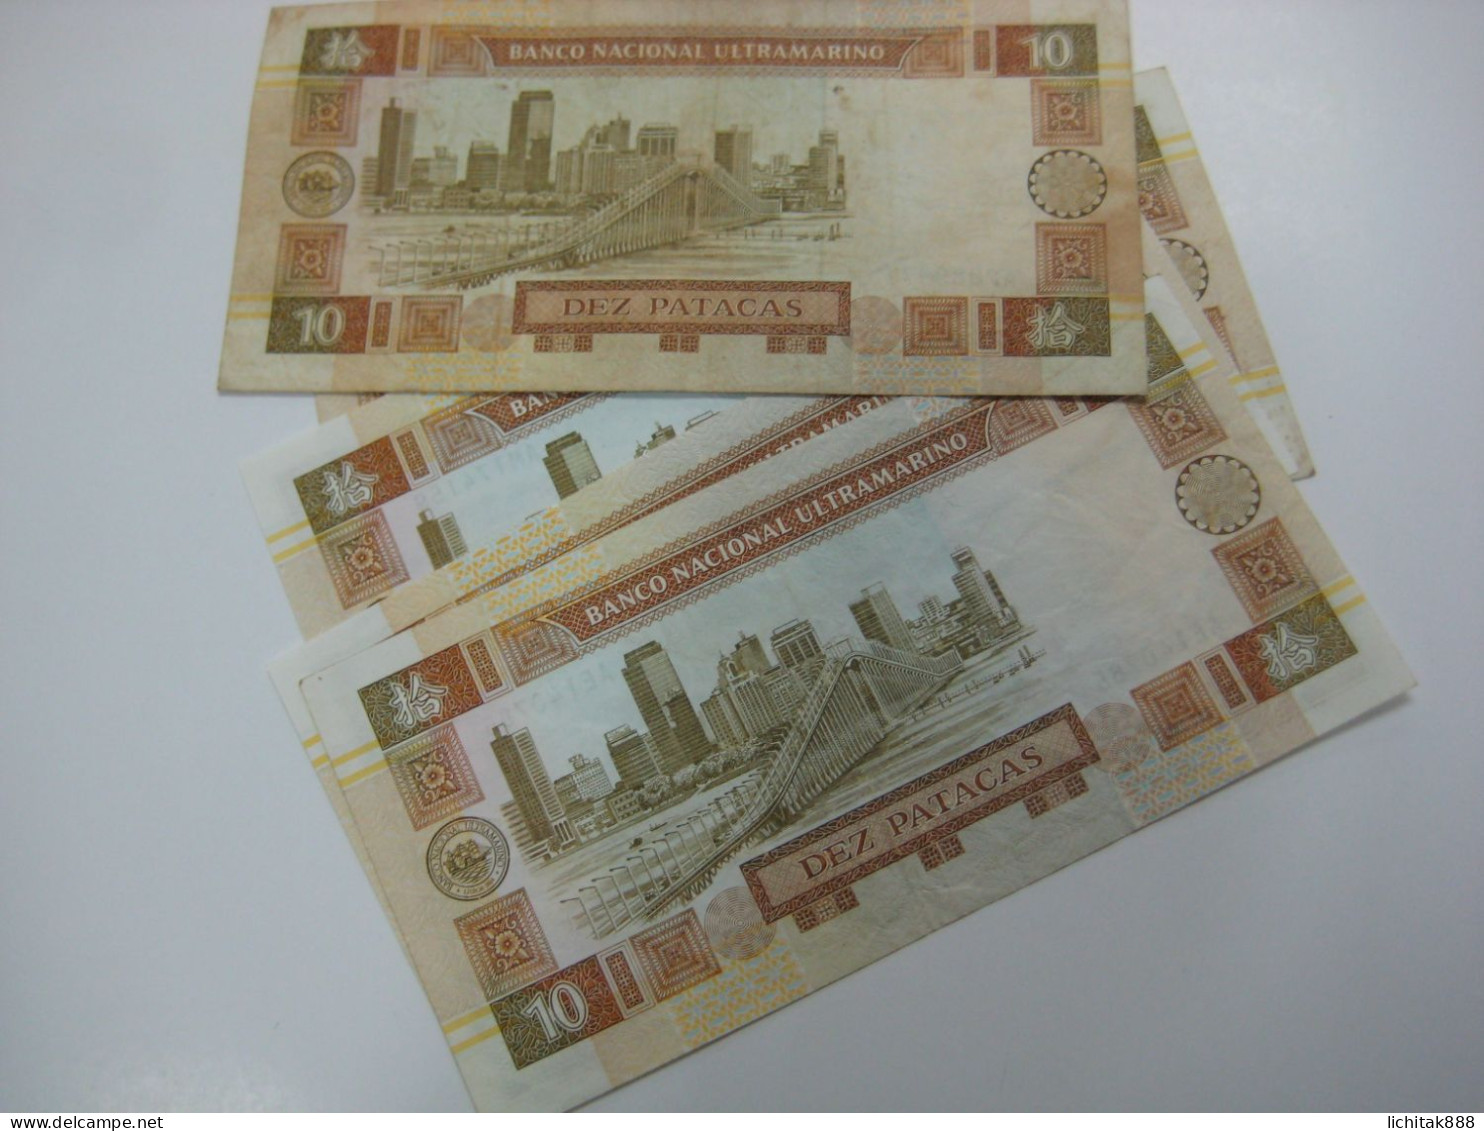 1991 Macau Banco Nacional Ultrmarino $10 Patacas Banknote Used €2/pc Number Random - Macao